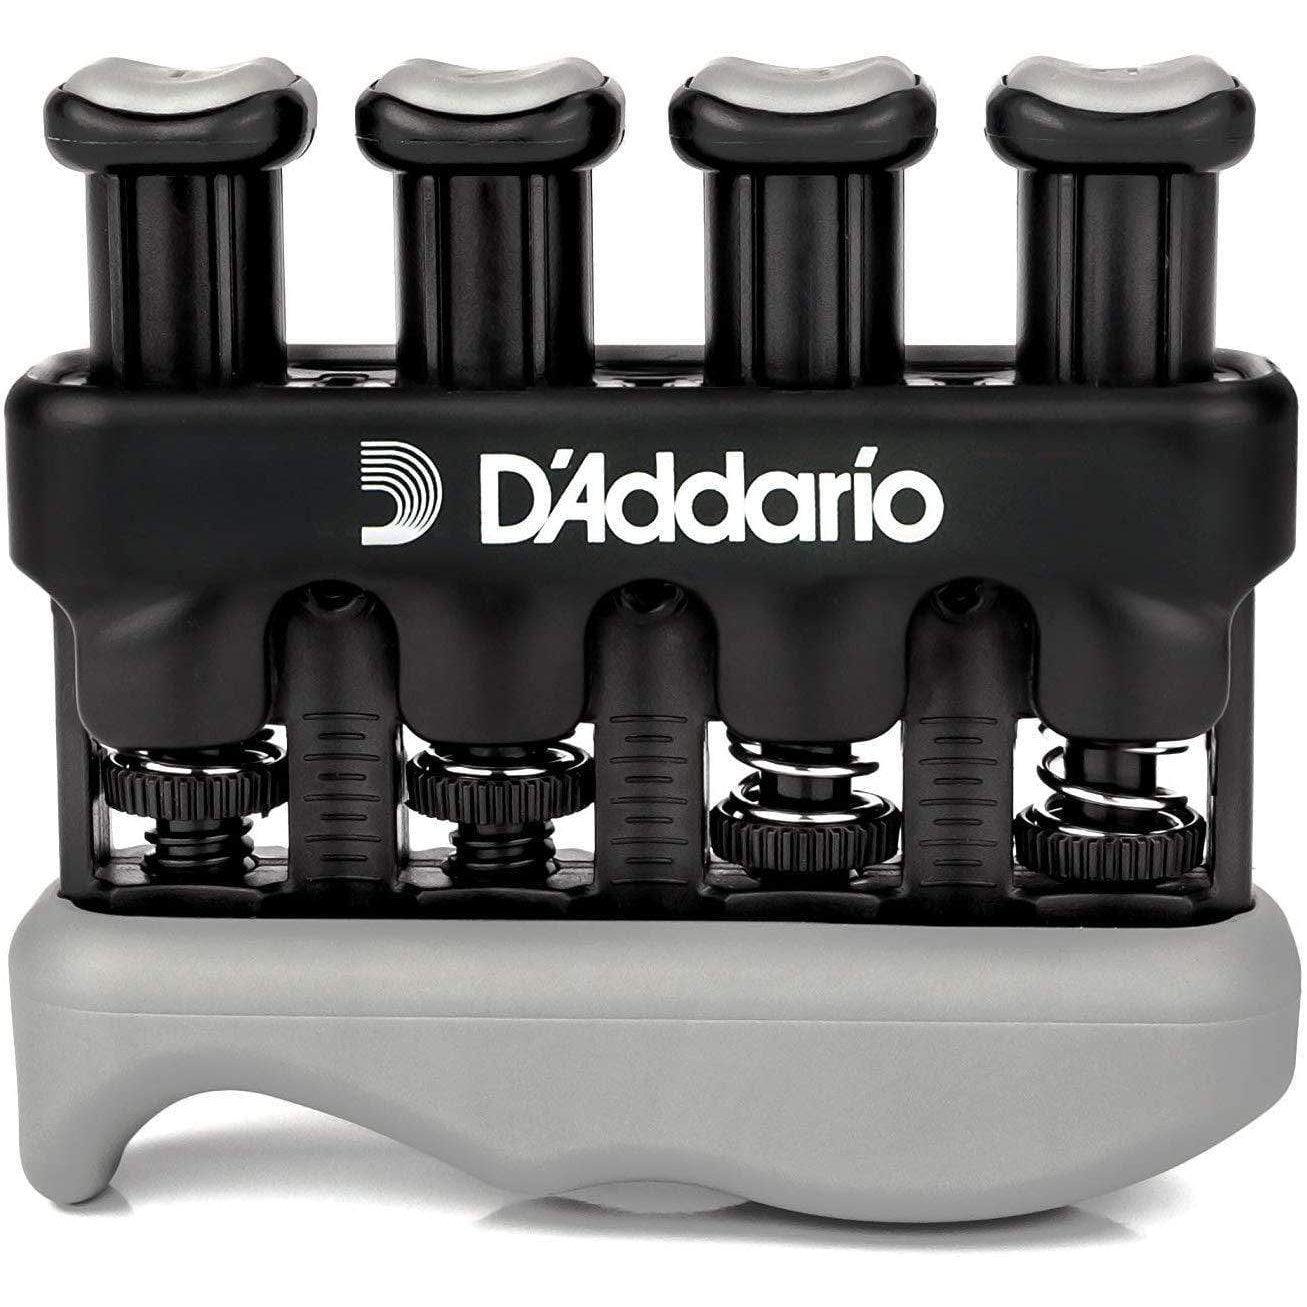 D'Addario Varigrip Adjustable Hand Exerciser